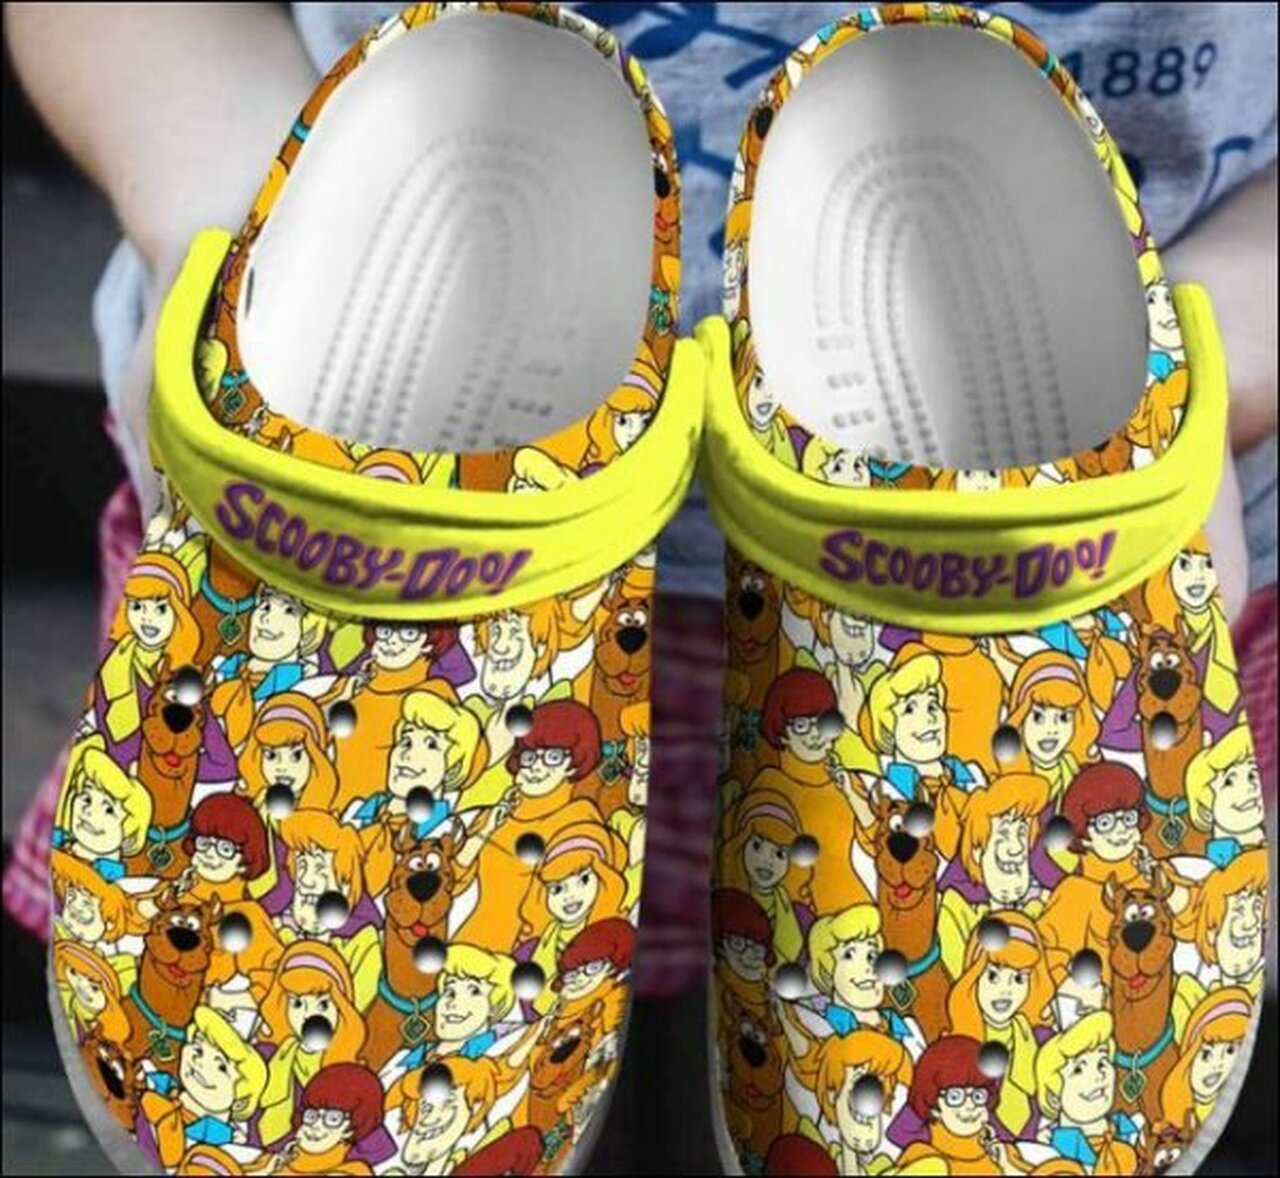 Scooby-doo Yellow Crocs Crocband Clog Shoes